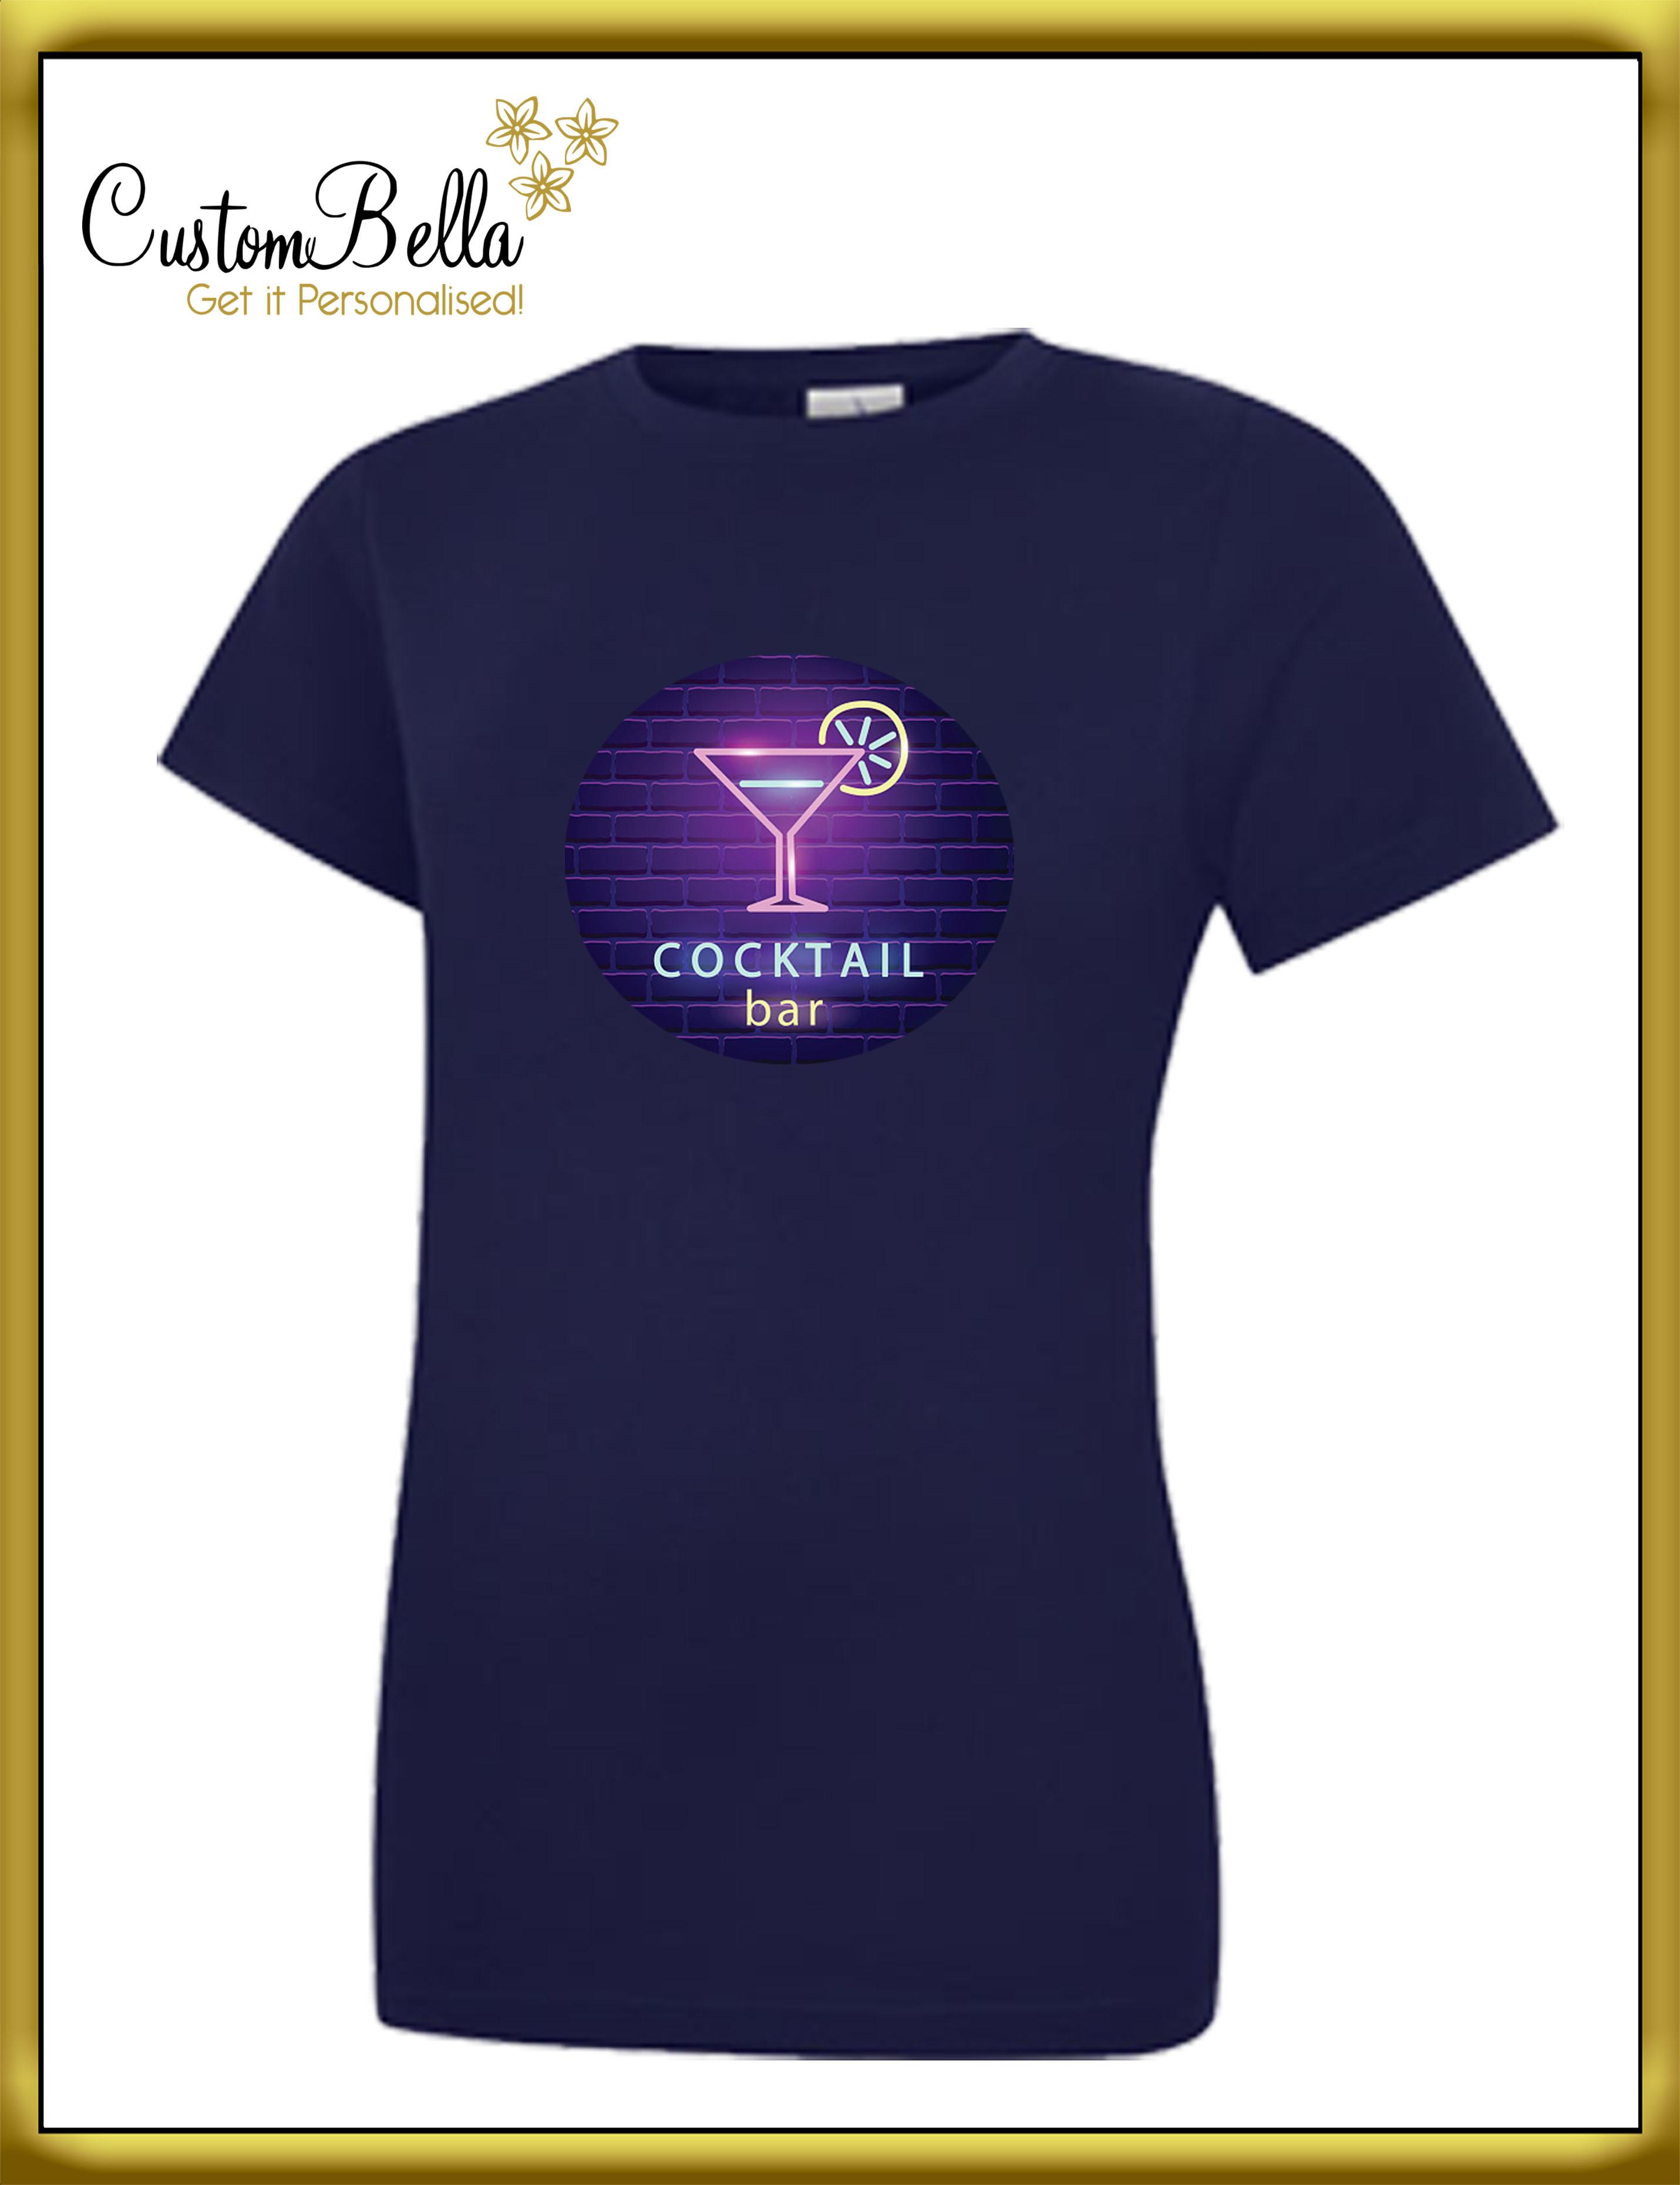 Full Colour Printed Women's T-shirt navy